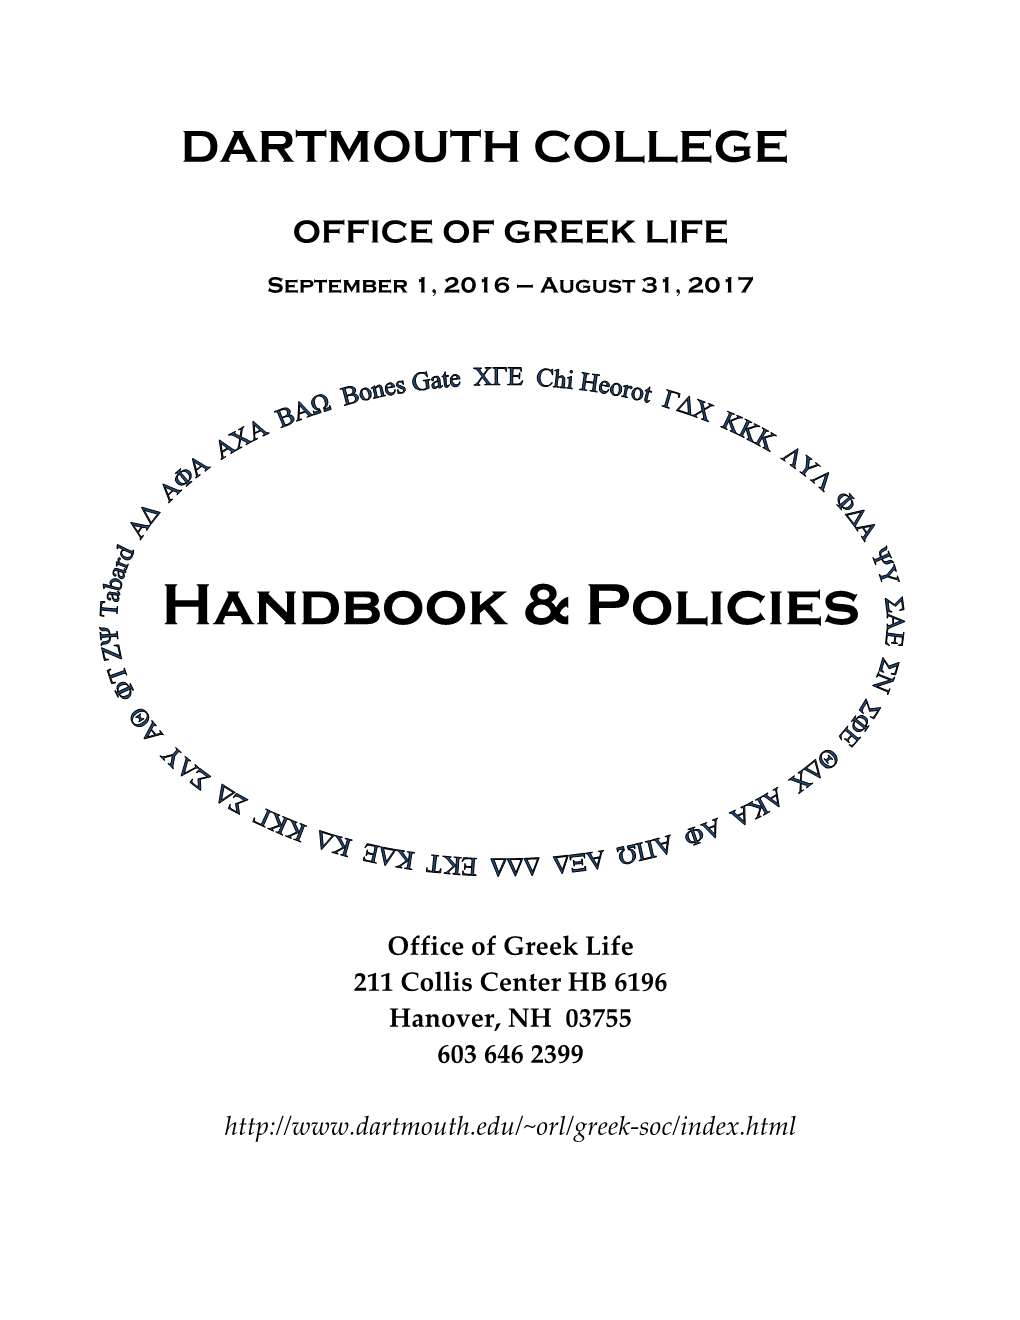 Handbook & Policies